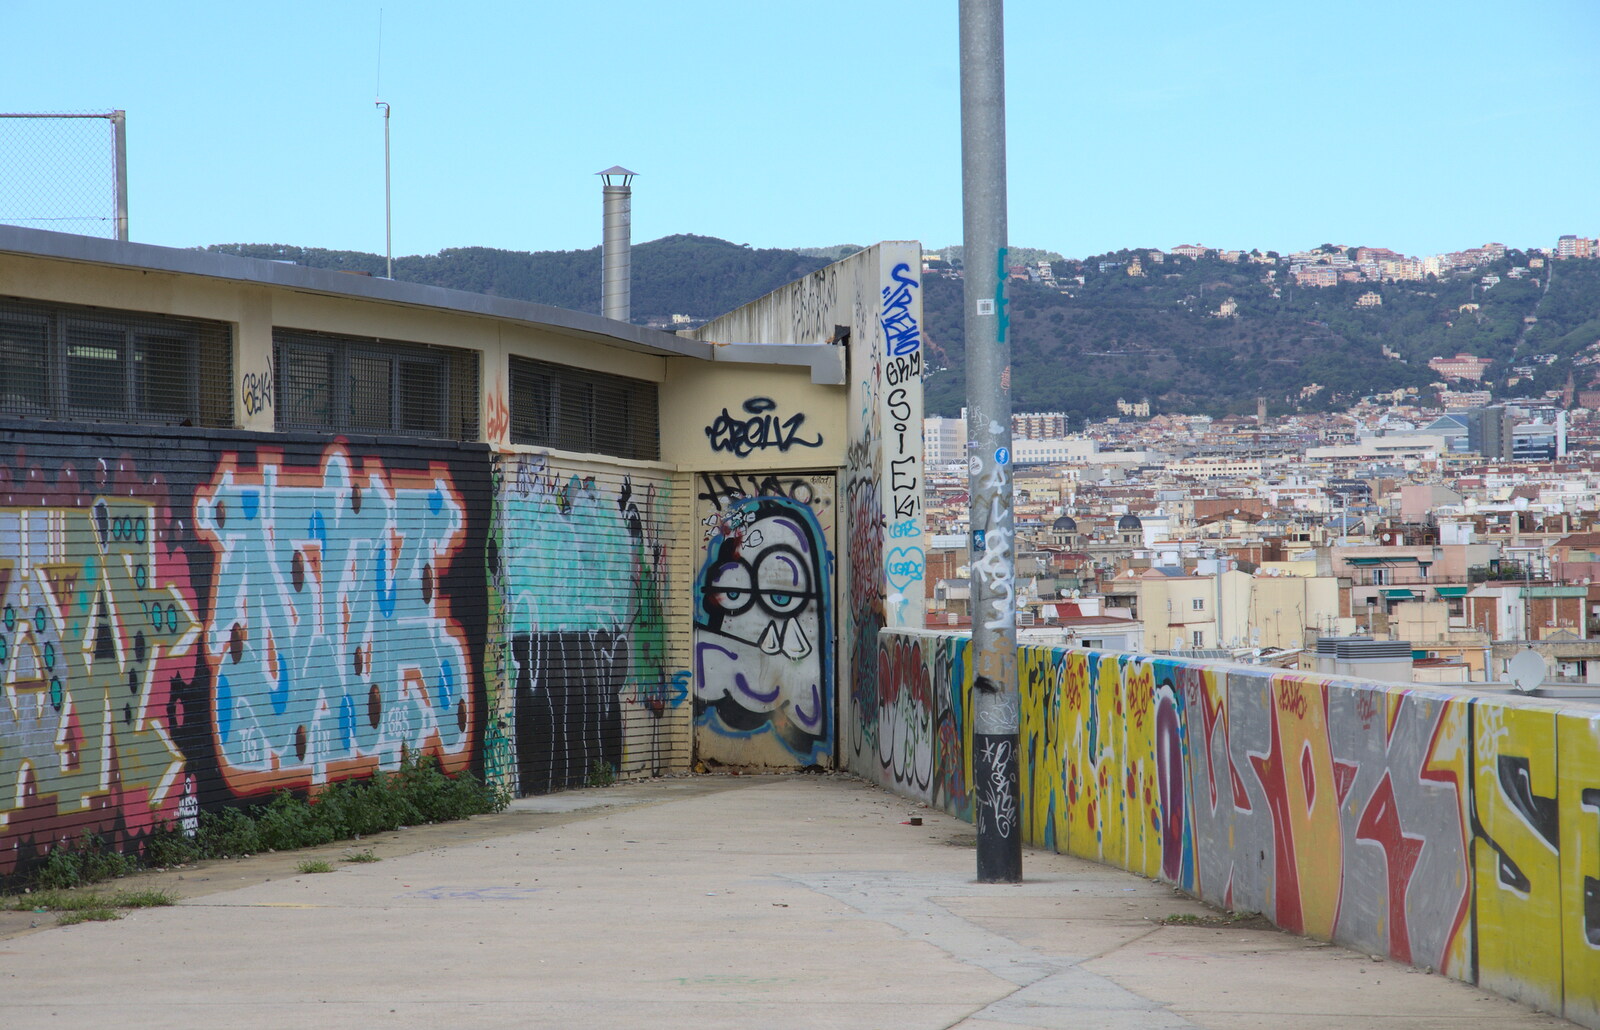 More graffiti from Barcelona and Parc Montjuïc, Catalonia, Spain - 21st October 2017